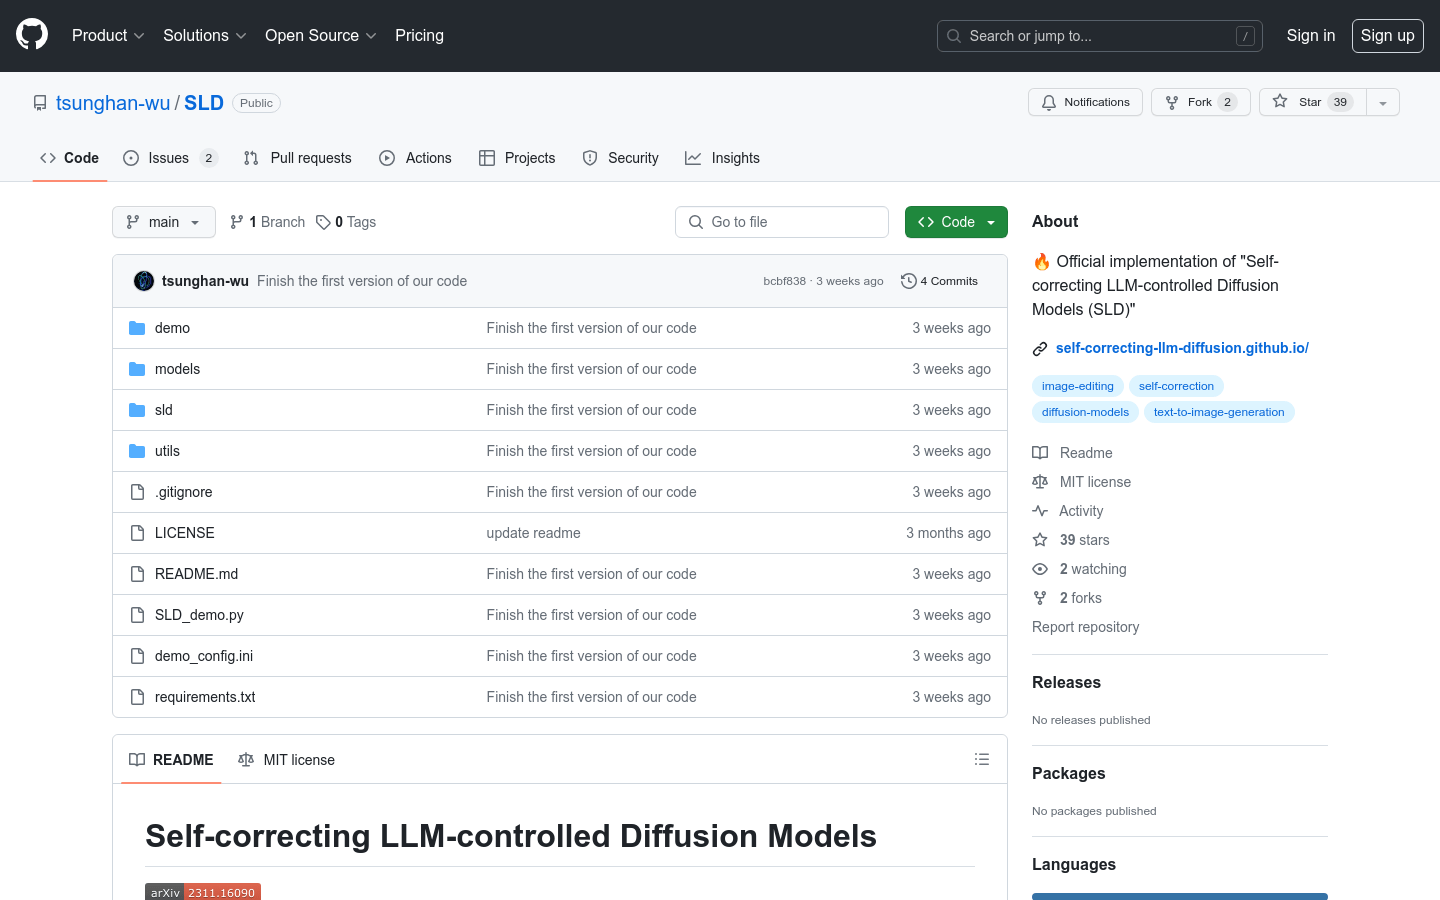 SLD (Self-correcting LLM-controlled Diffusion Models)